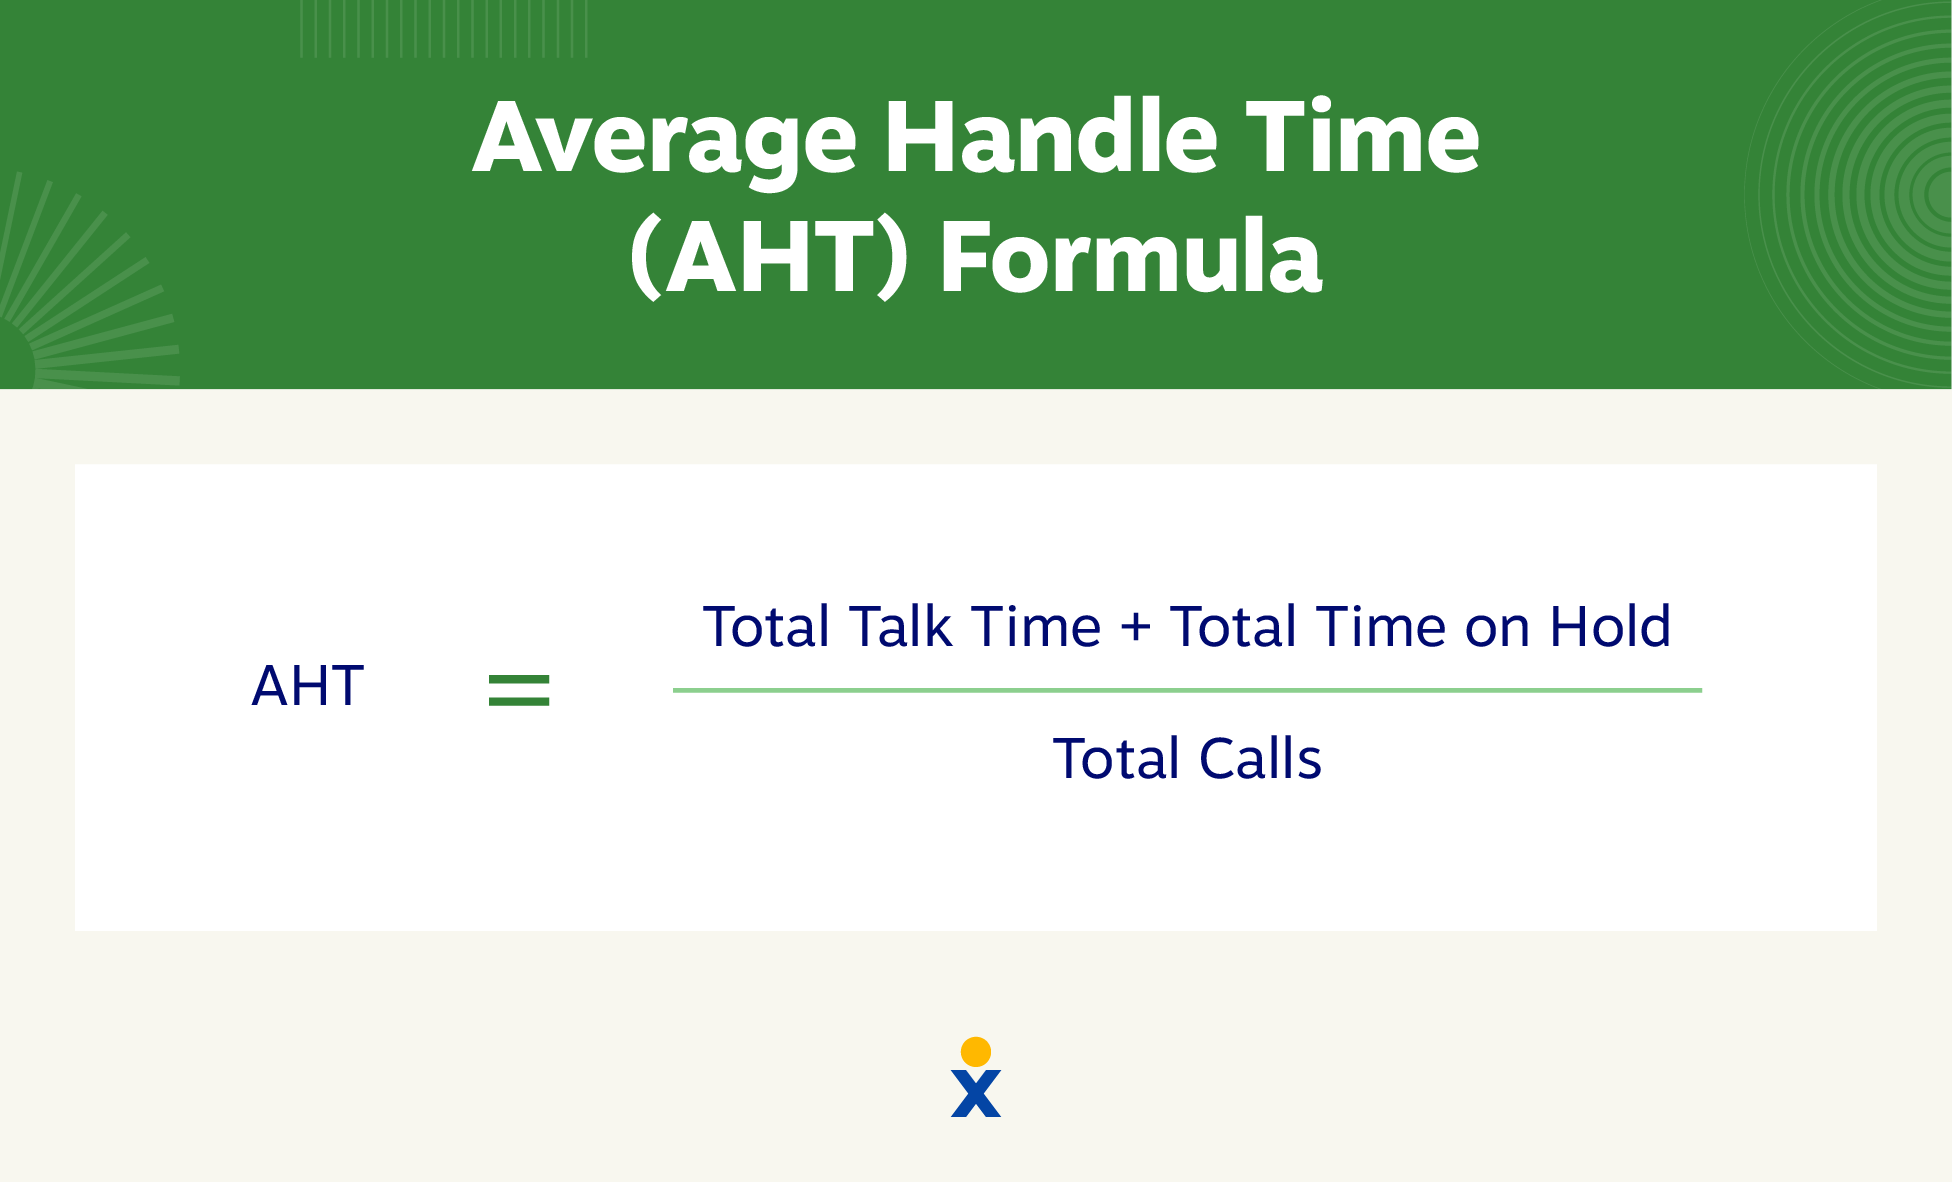 Average Handle Time (AHT) formula